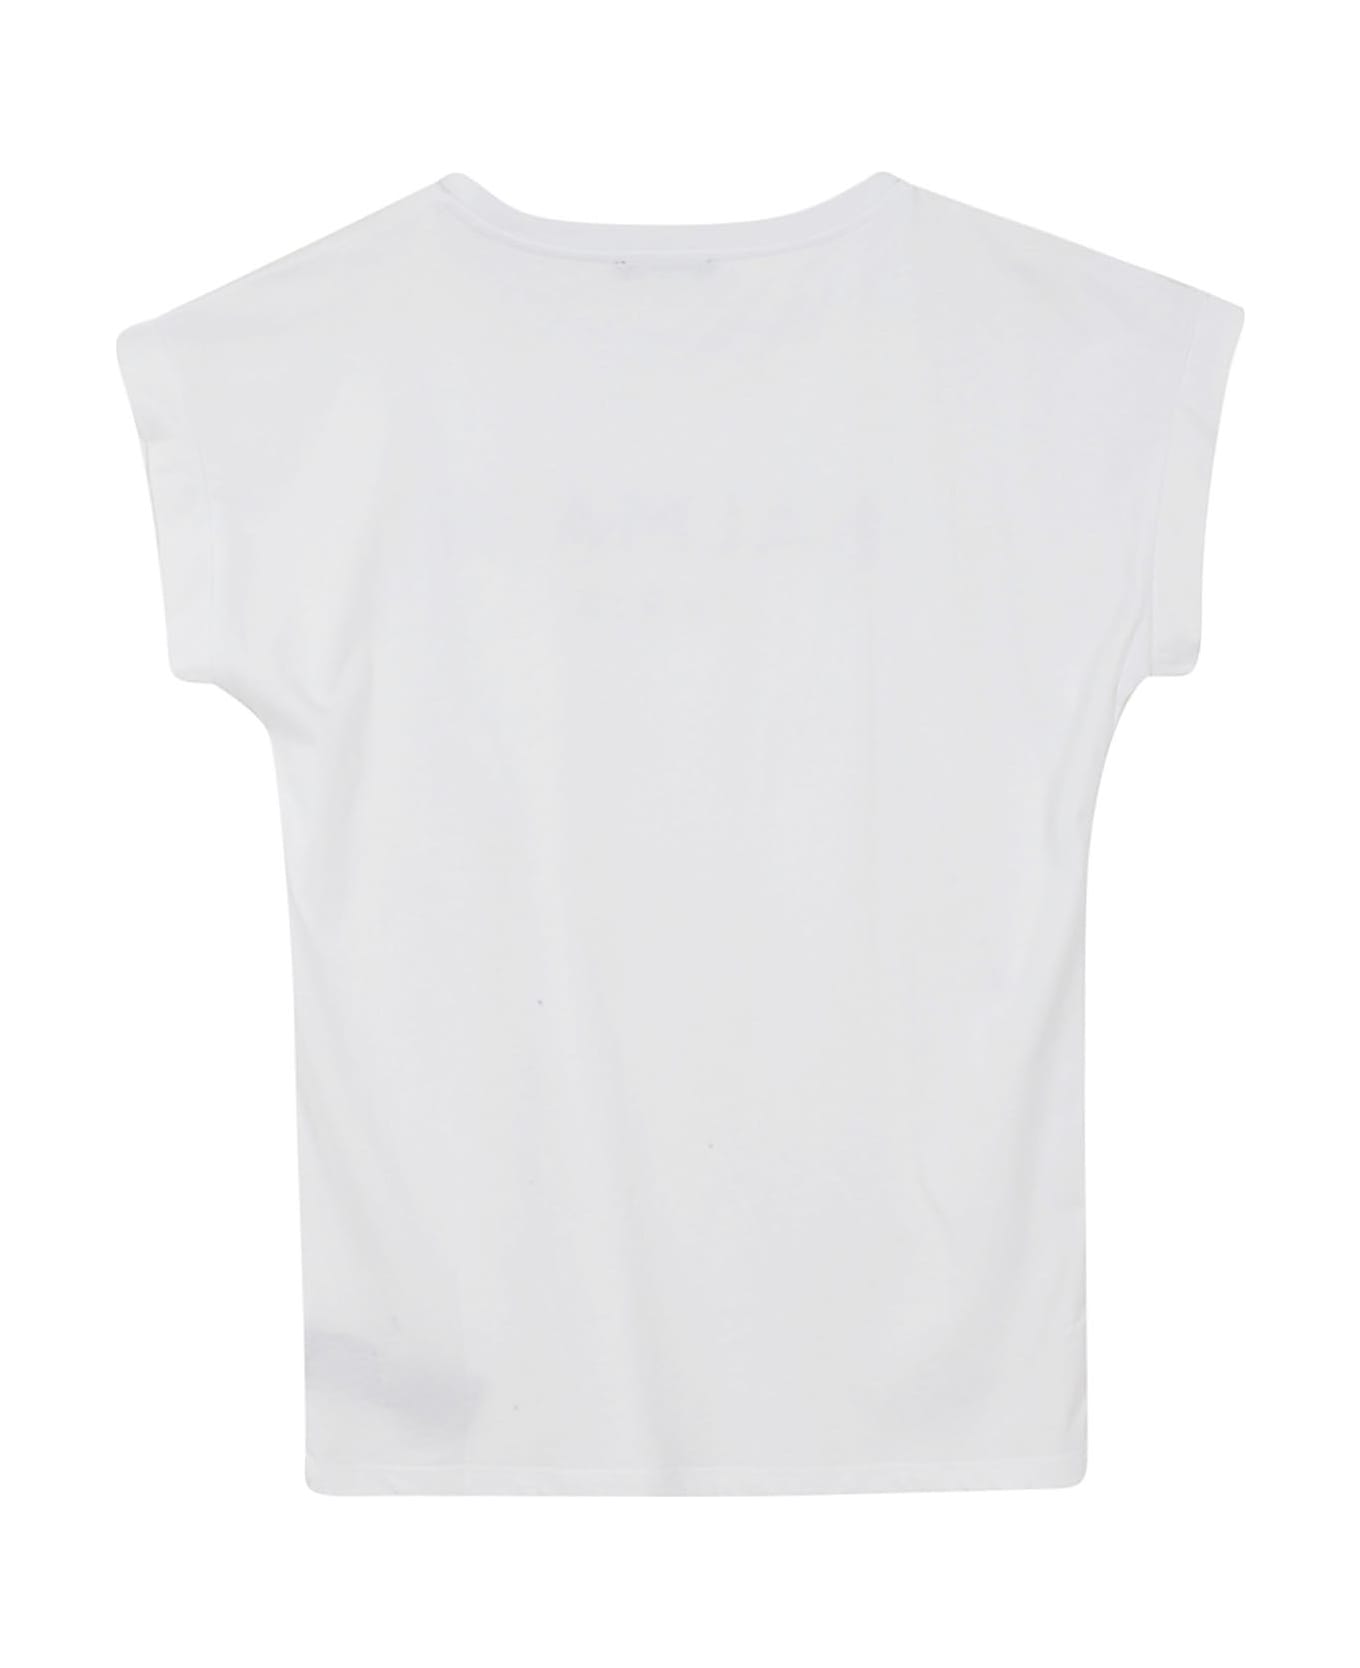 Balmain T Shirt - Or White Gold Tシャツ＆ポロシャツ